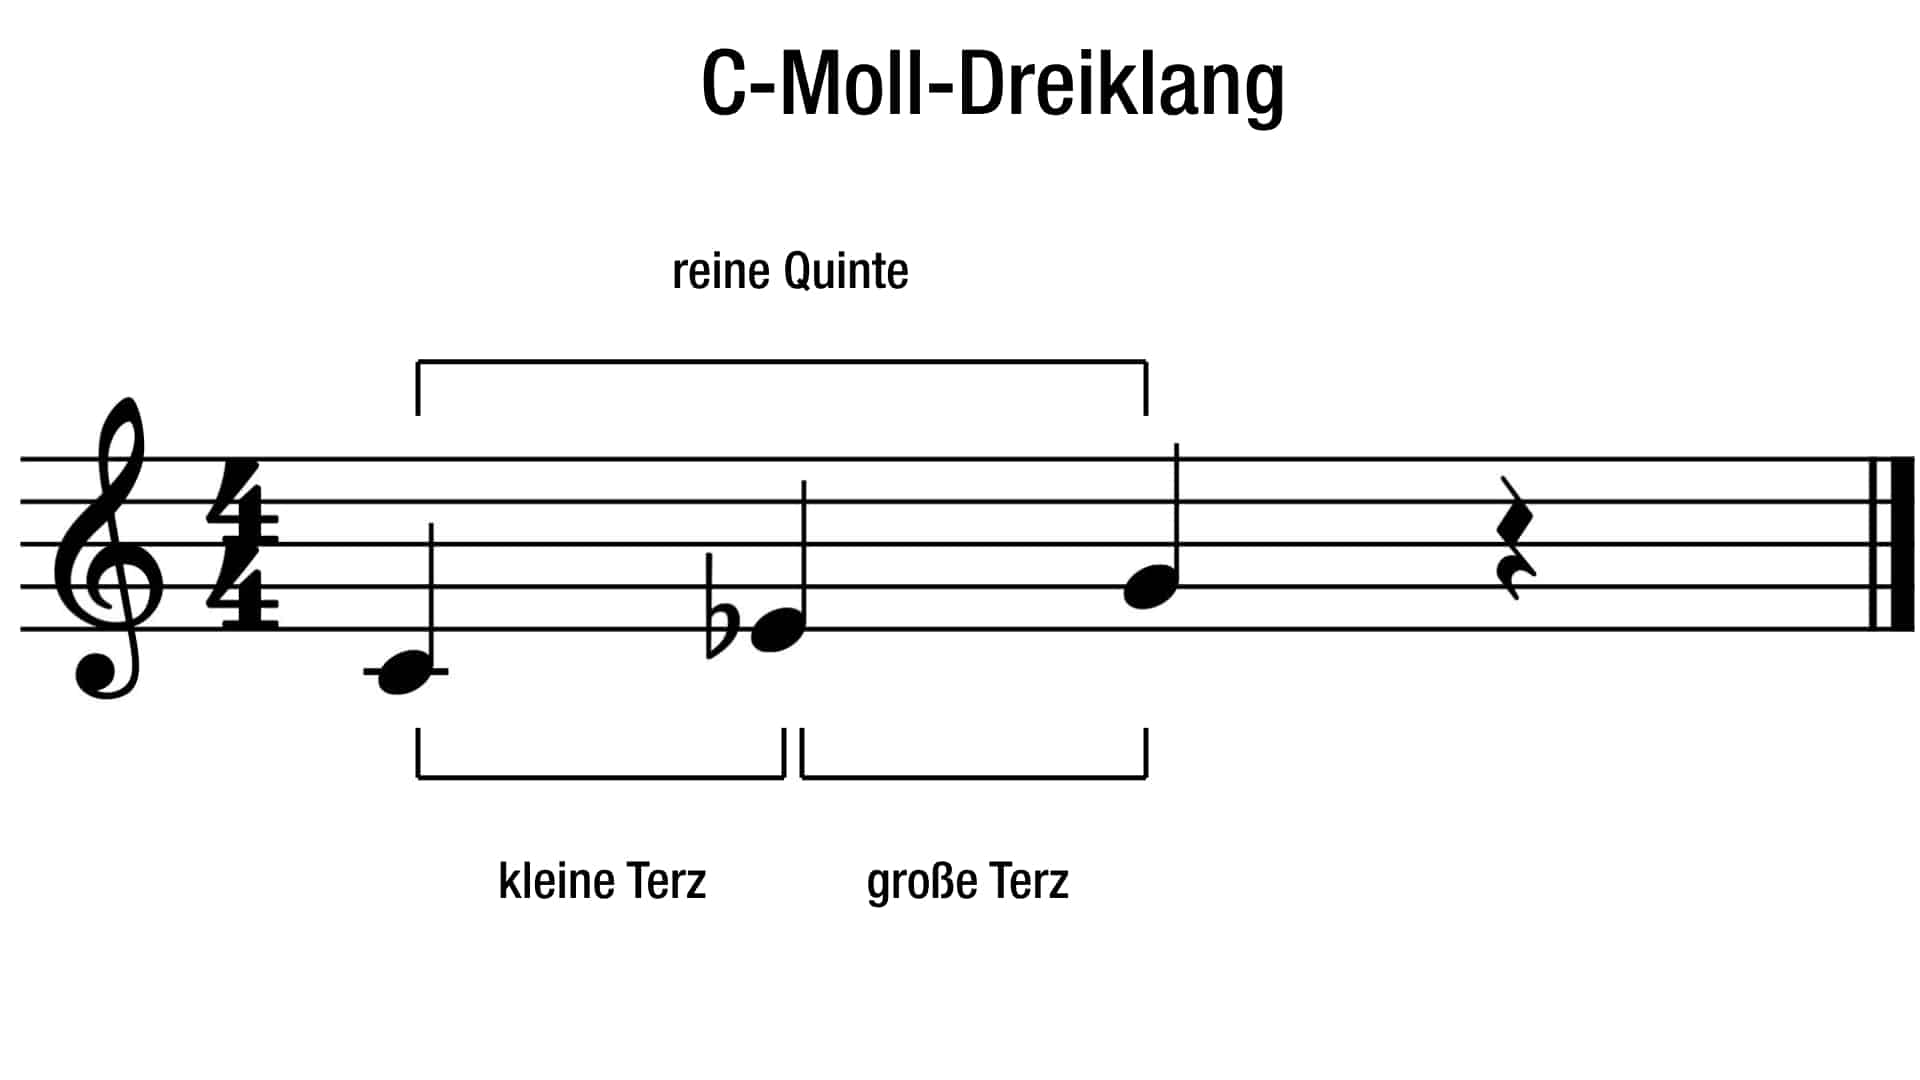 C-Moll Dreiklang aufgeteilt